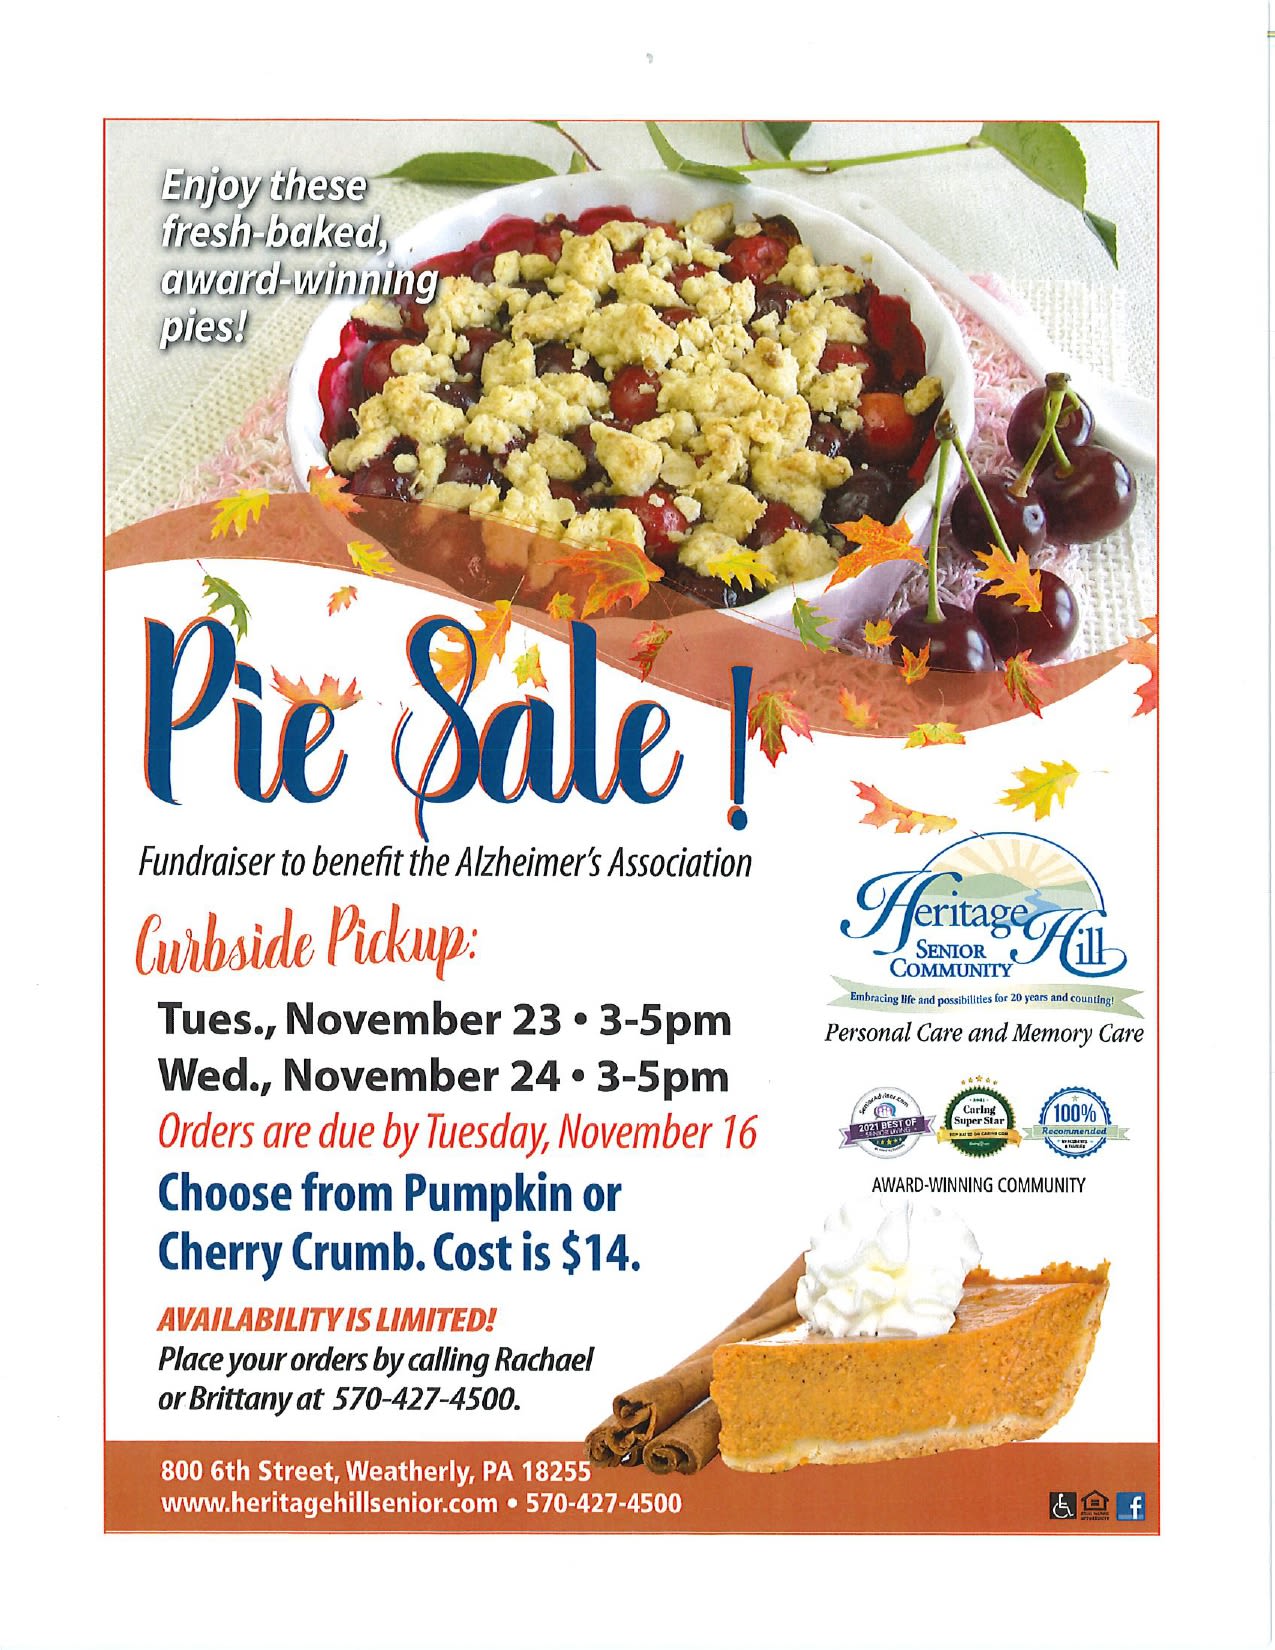 Pie sale flyer for Heritage Hill Senior Community